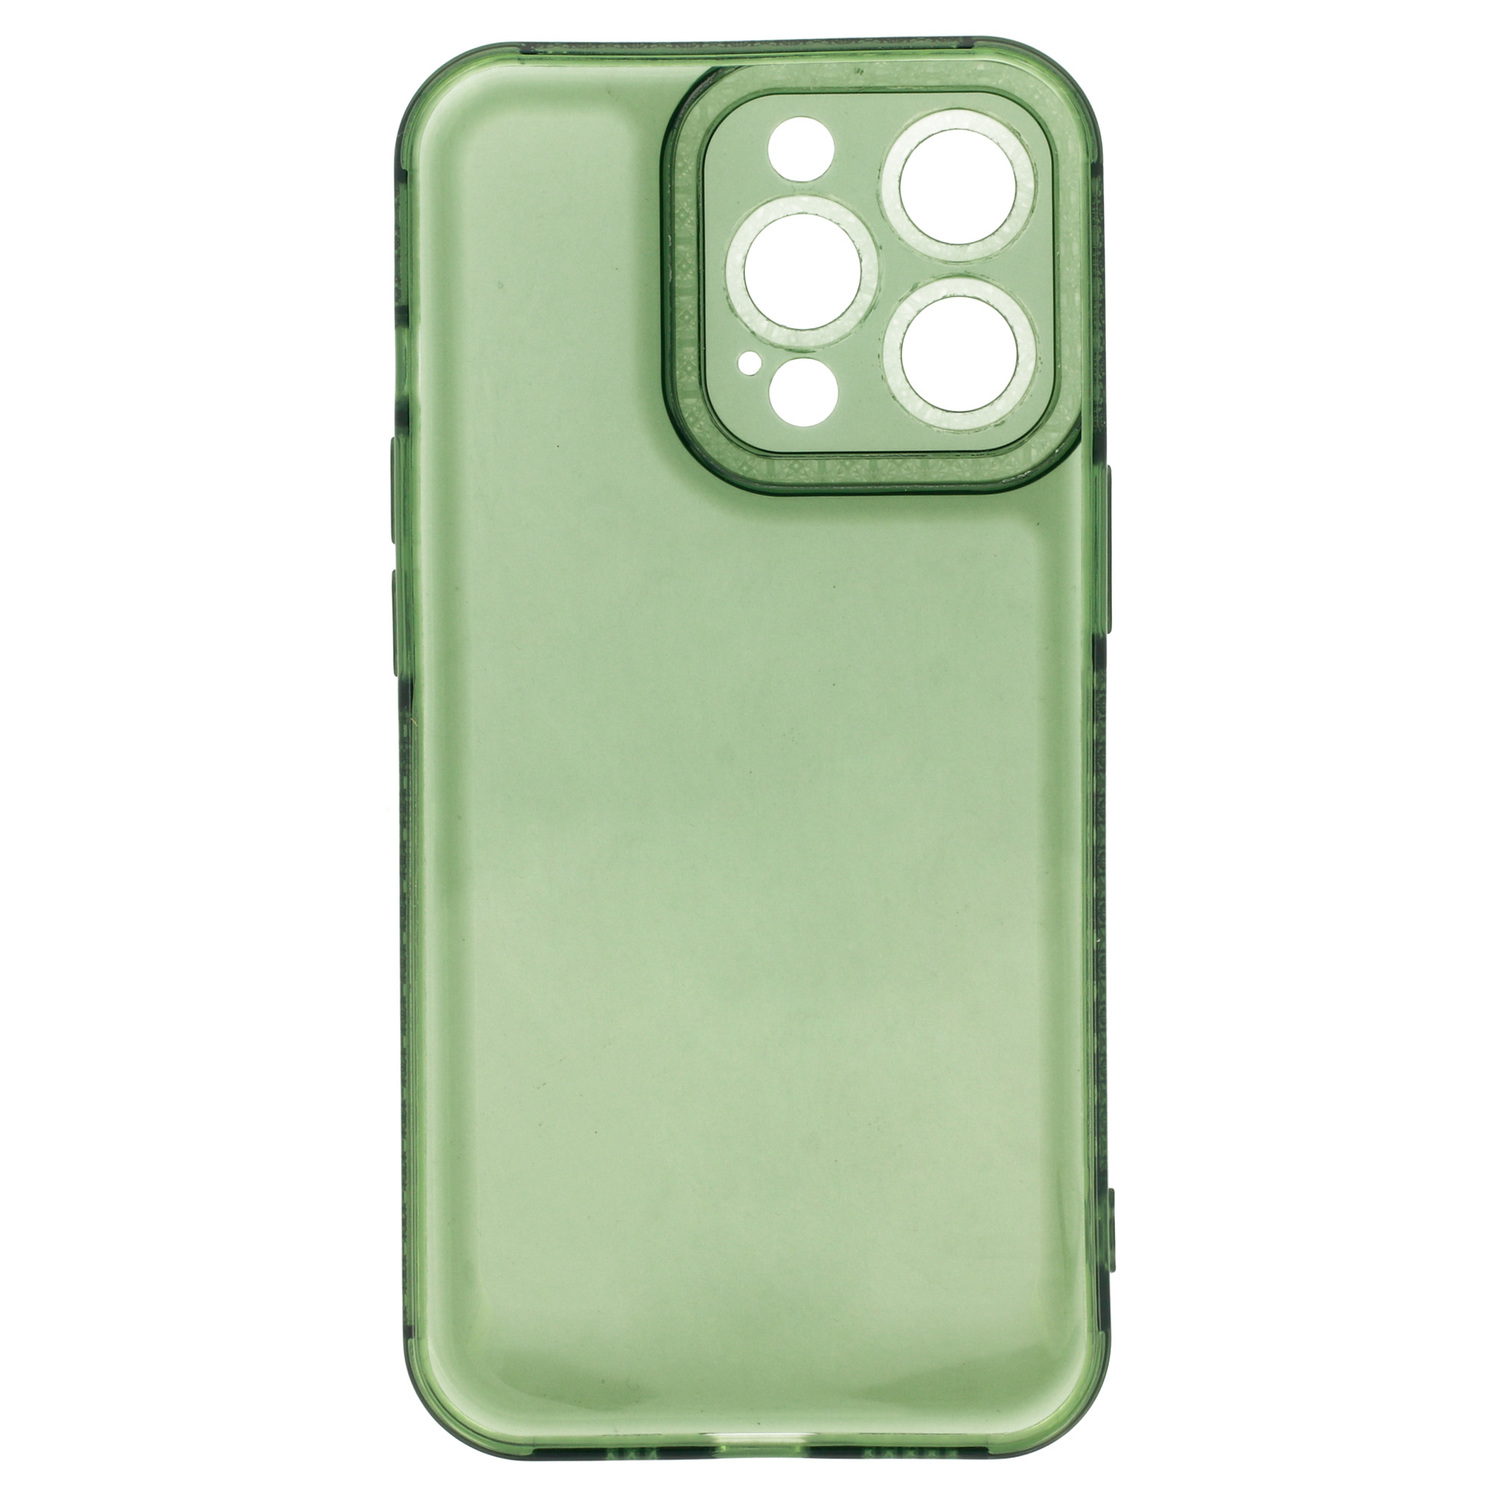 Pokrowiec etui silikonowe Crystal Diamond Case zielone APPLE iPhone X / 5